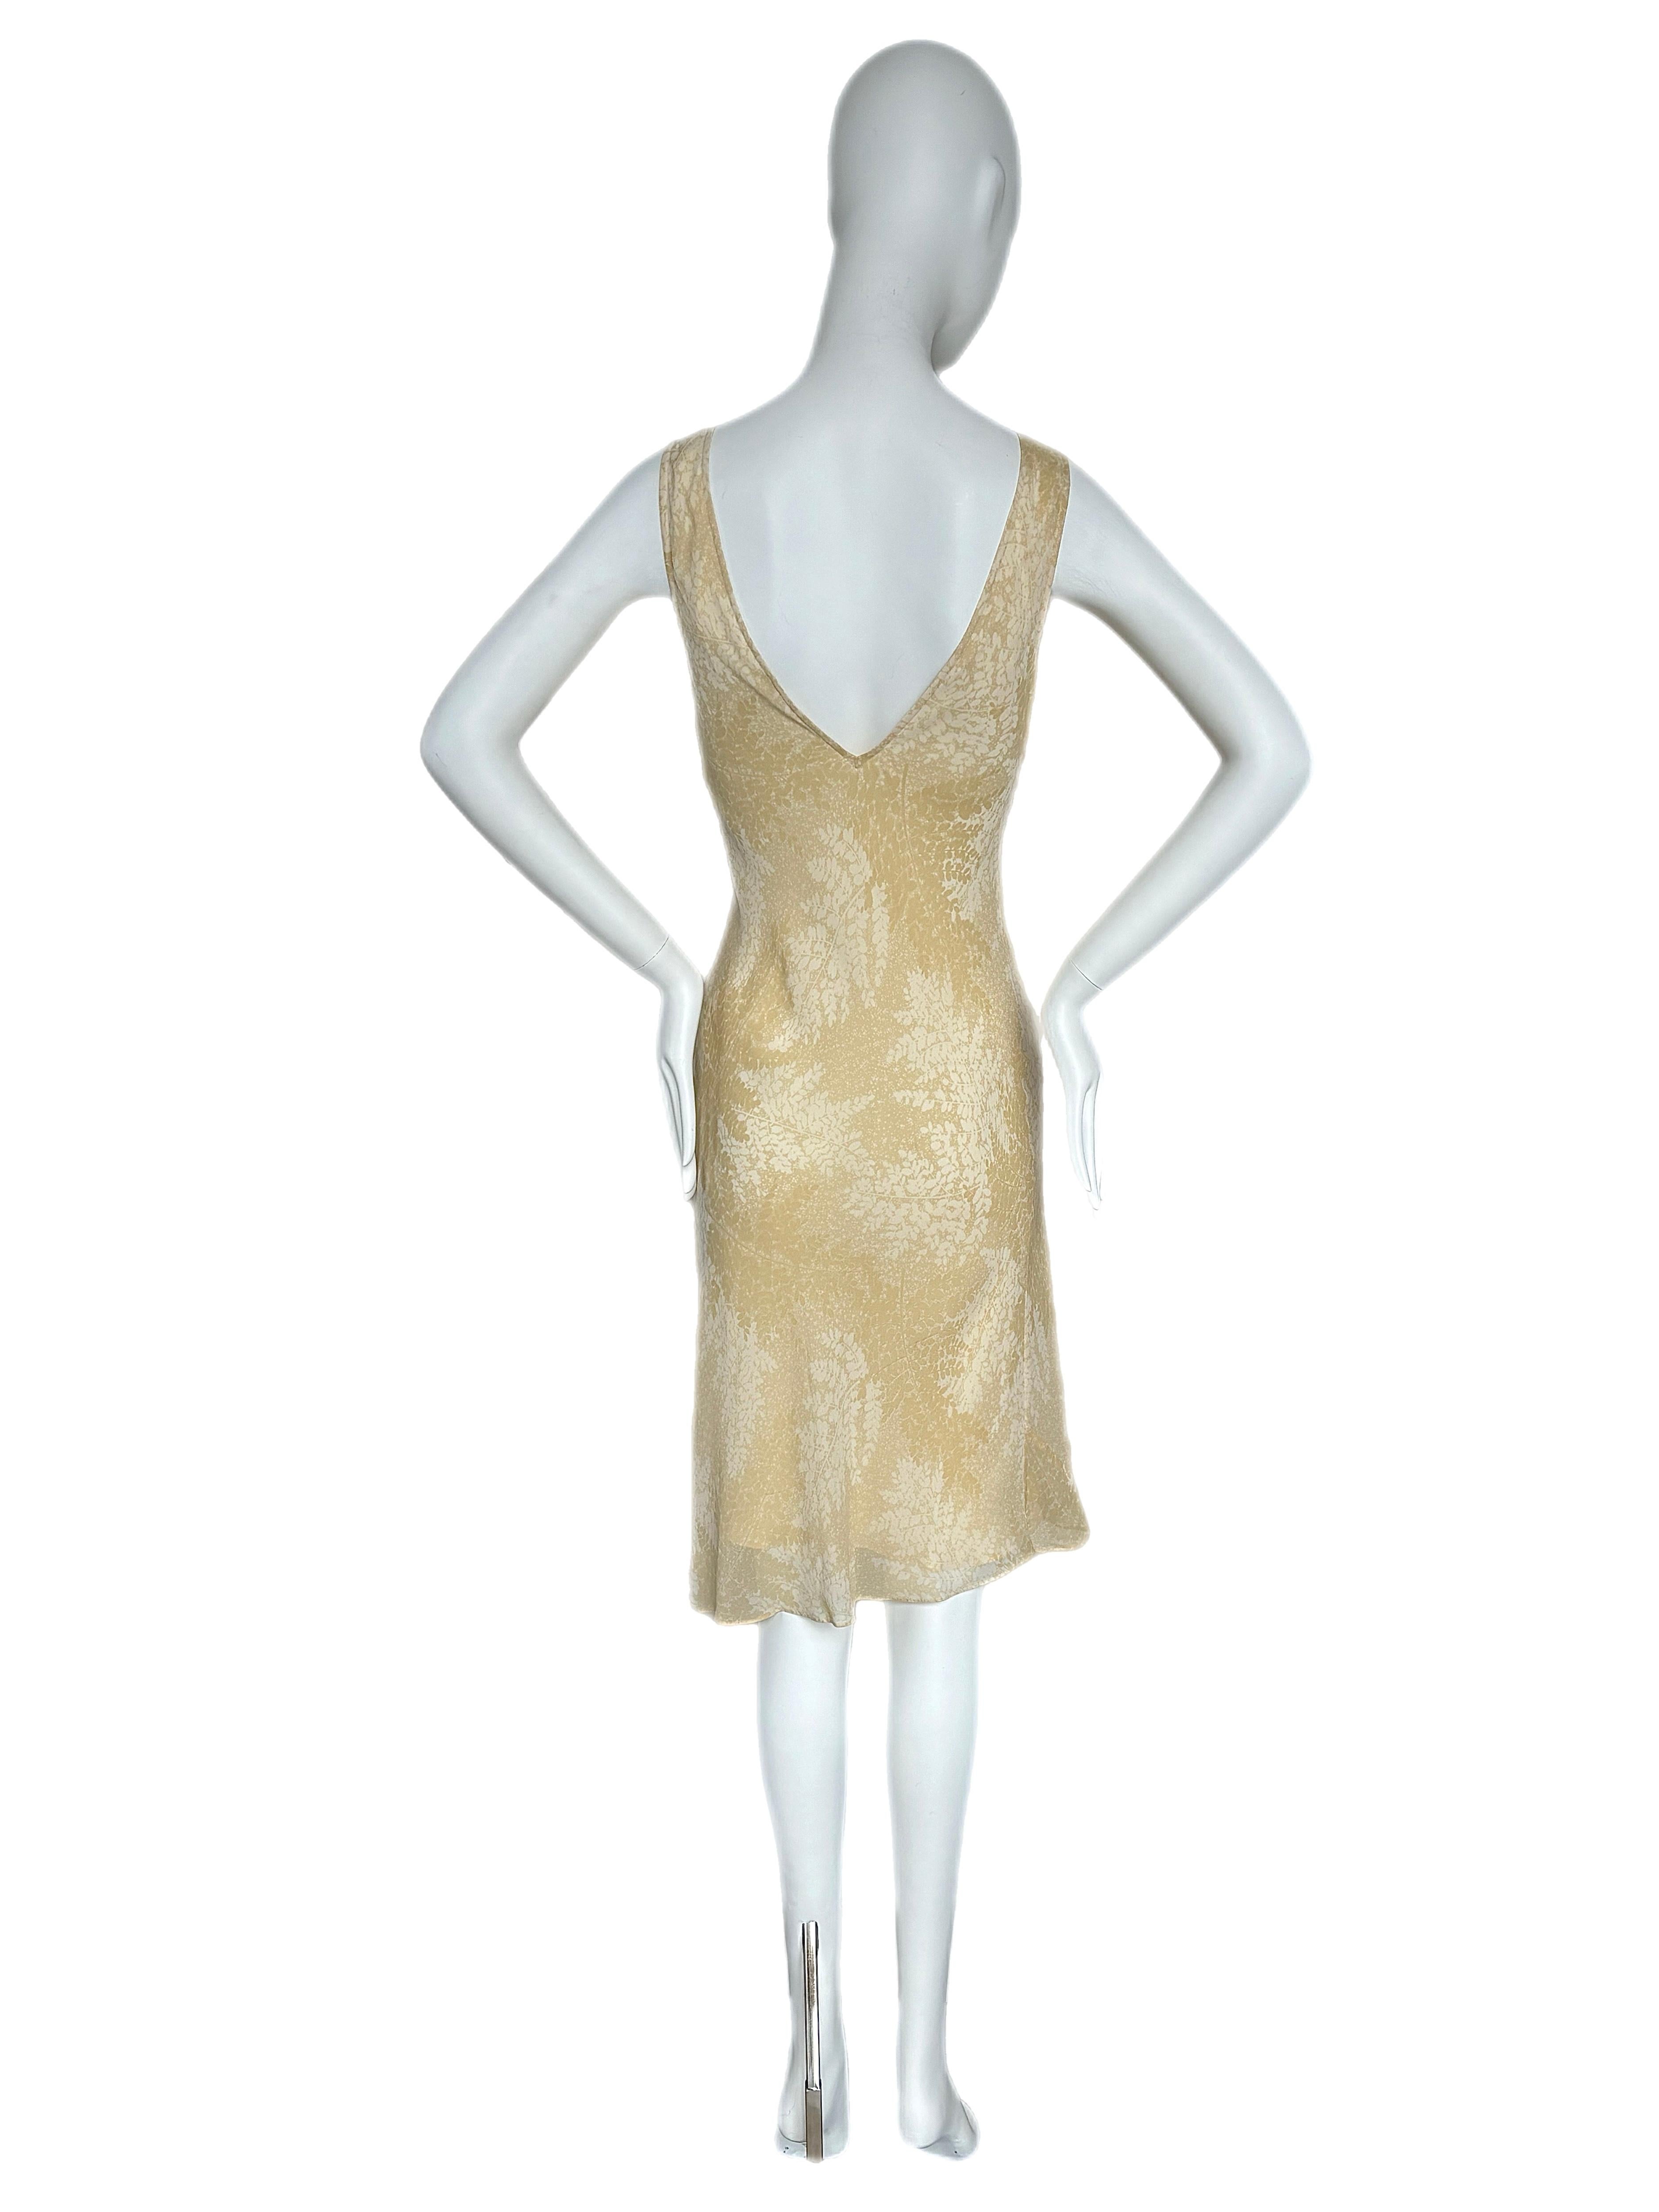 CALVIN KLEIN COLLECTION 90's Vintage Silk Slip Floral Dress In Excellent Condition For Sale In Leonardo, NJ